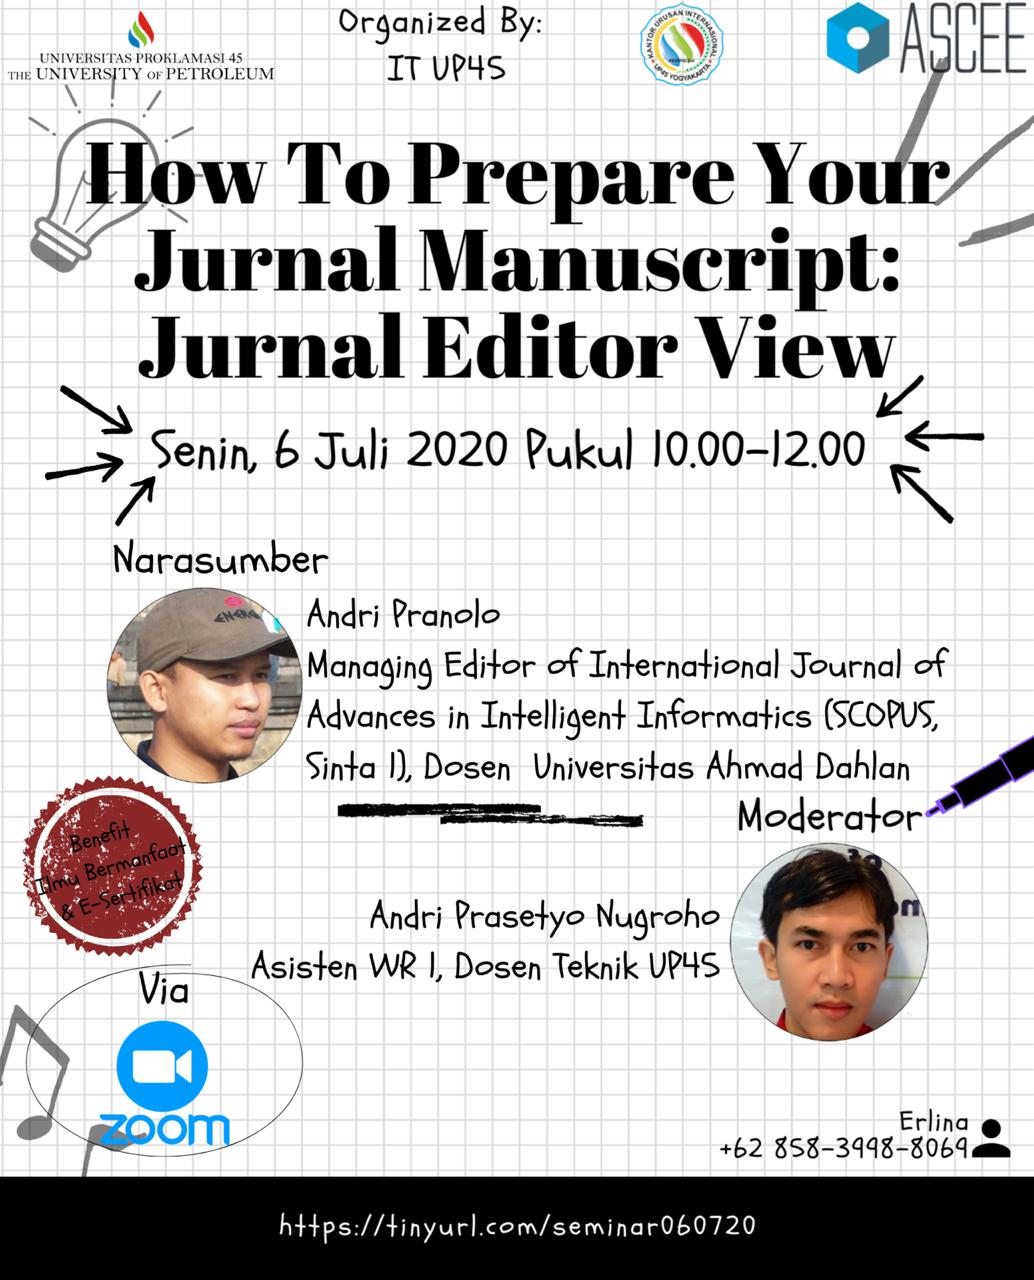 Seminar Online “How to prepare your journal manuscript : Journal Editor View